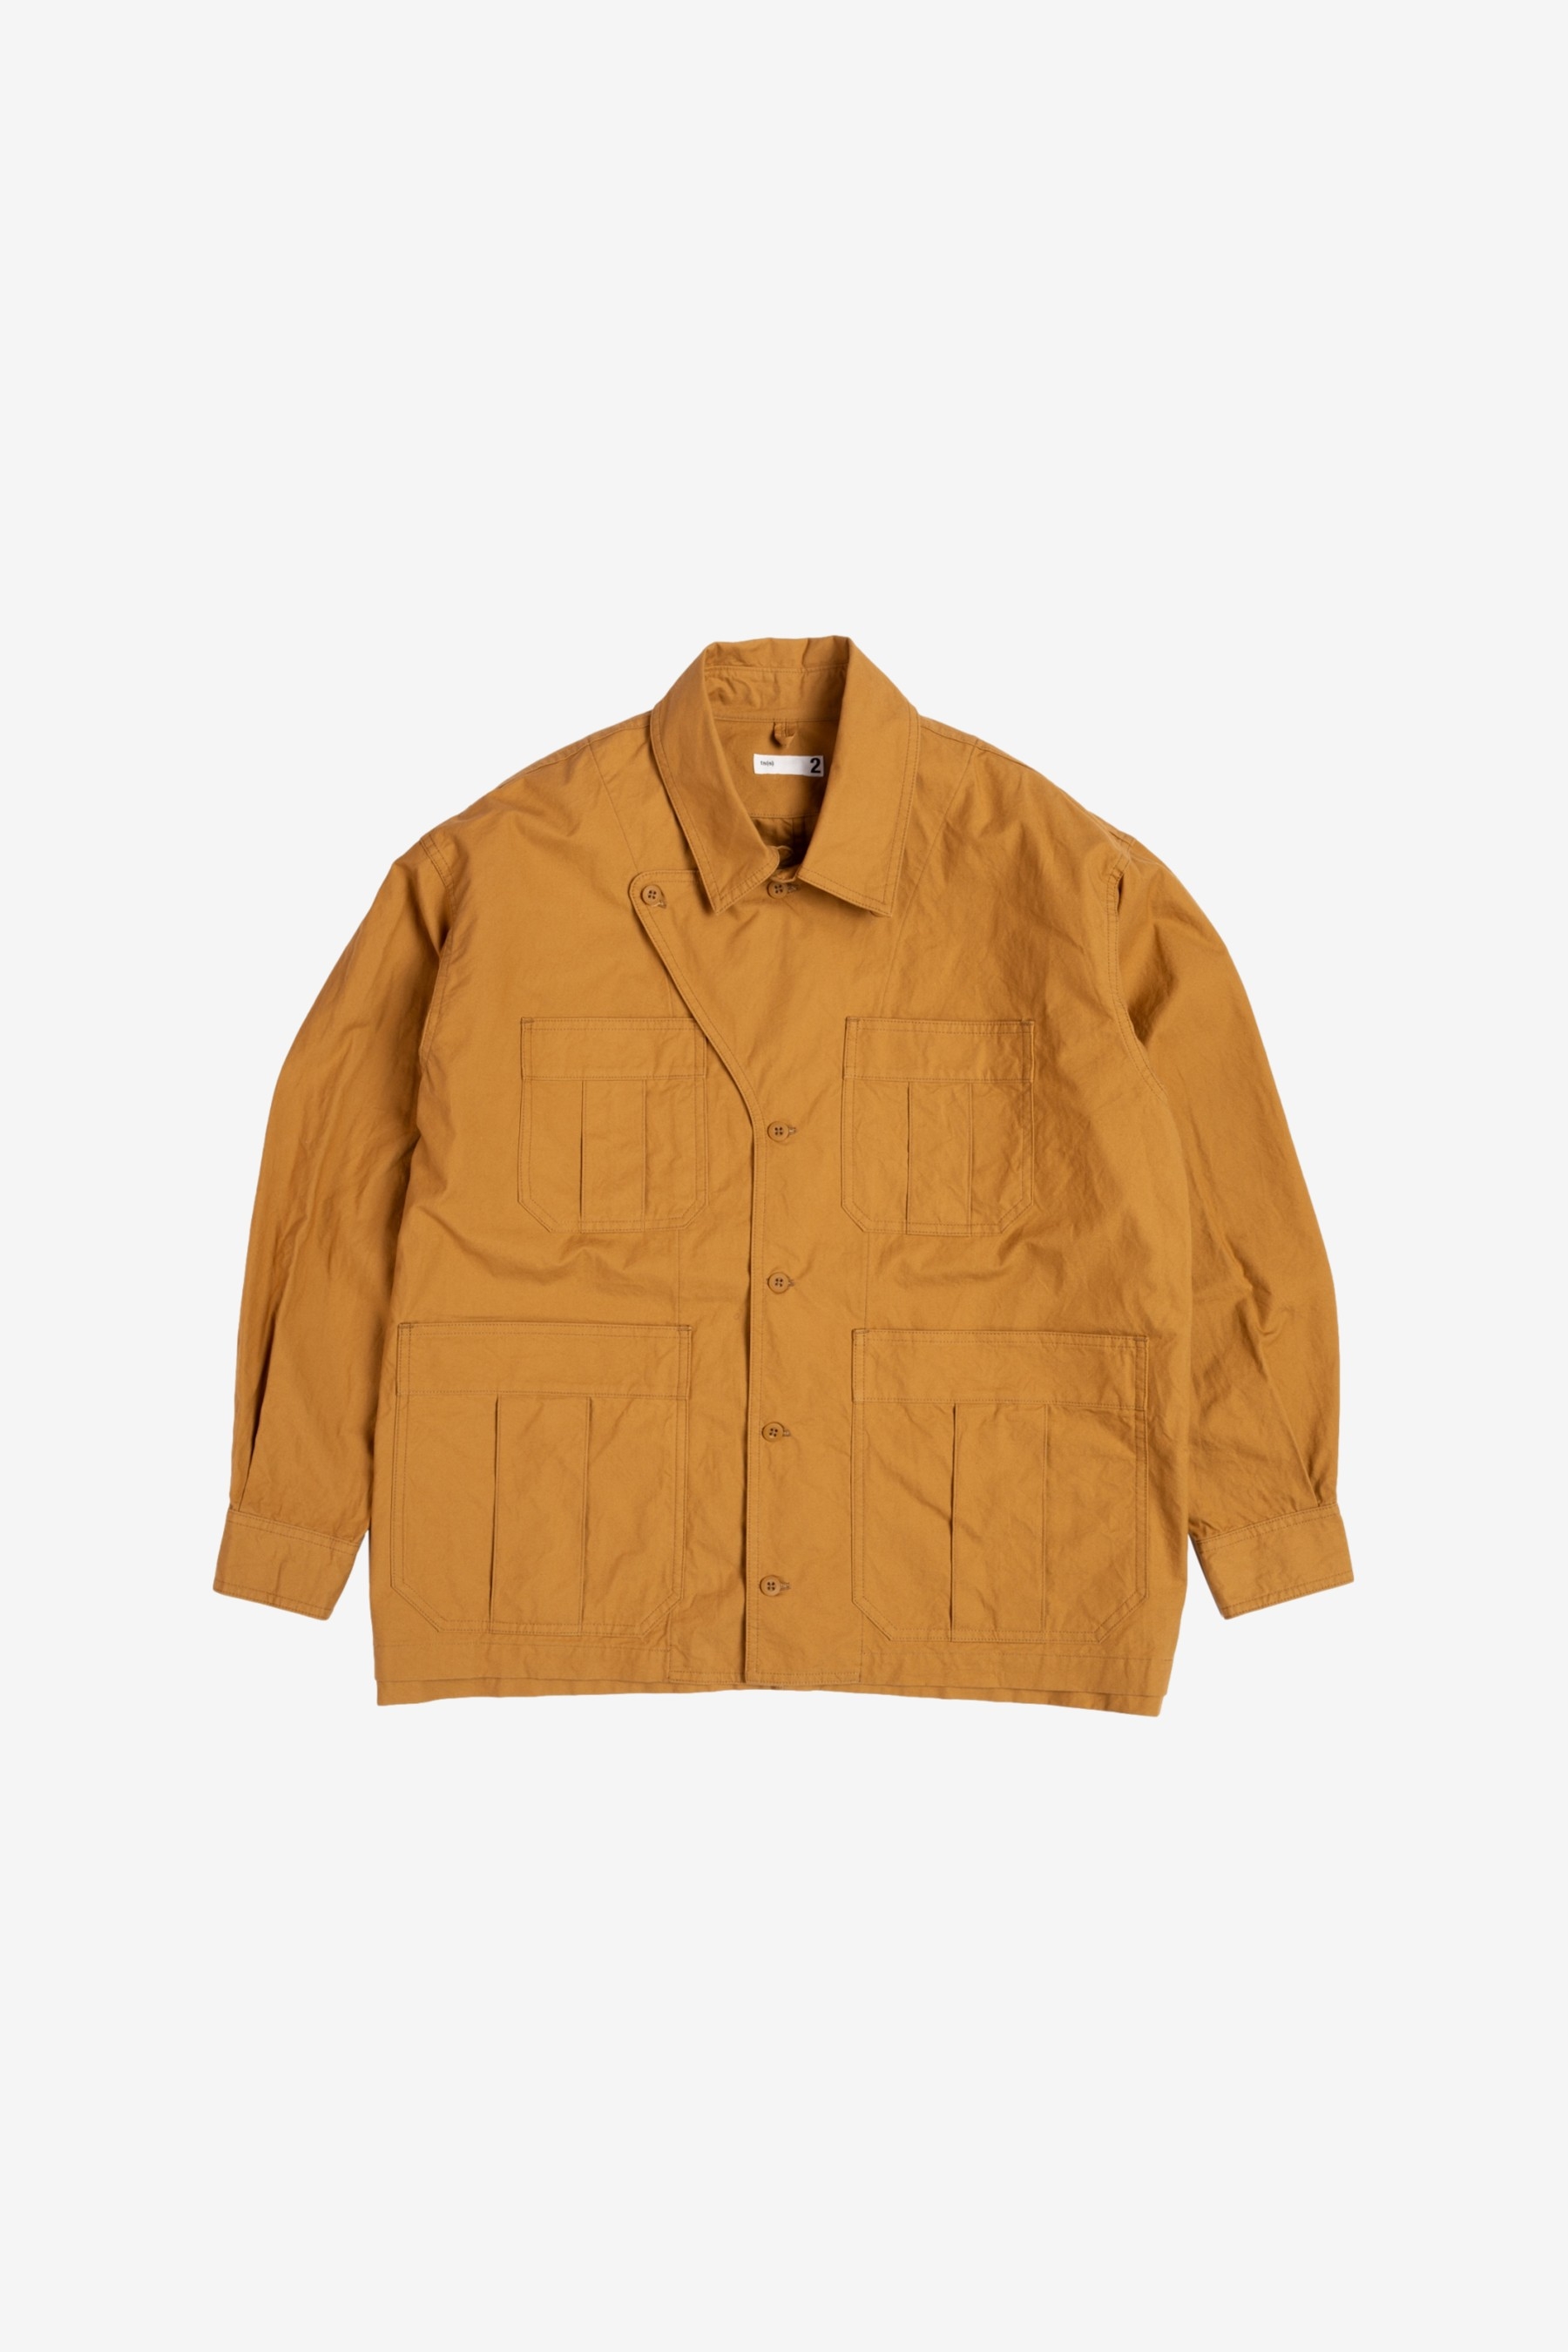 High Density Cotton Canvas Cloth Military Shirt Jacket in Ocher 